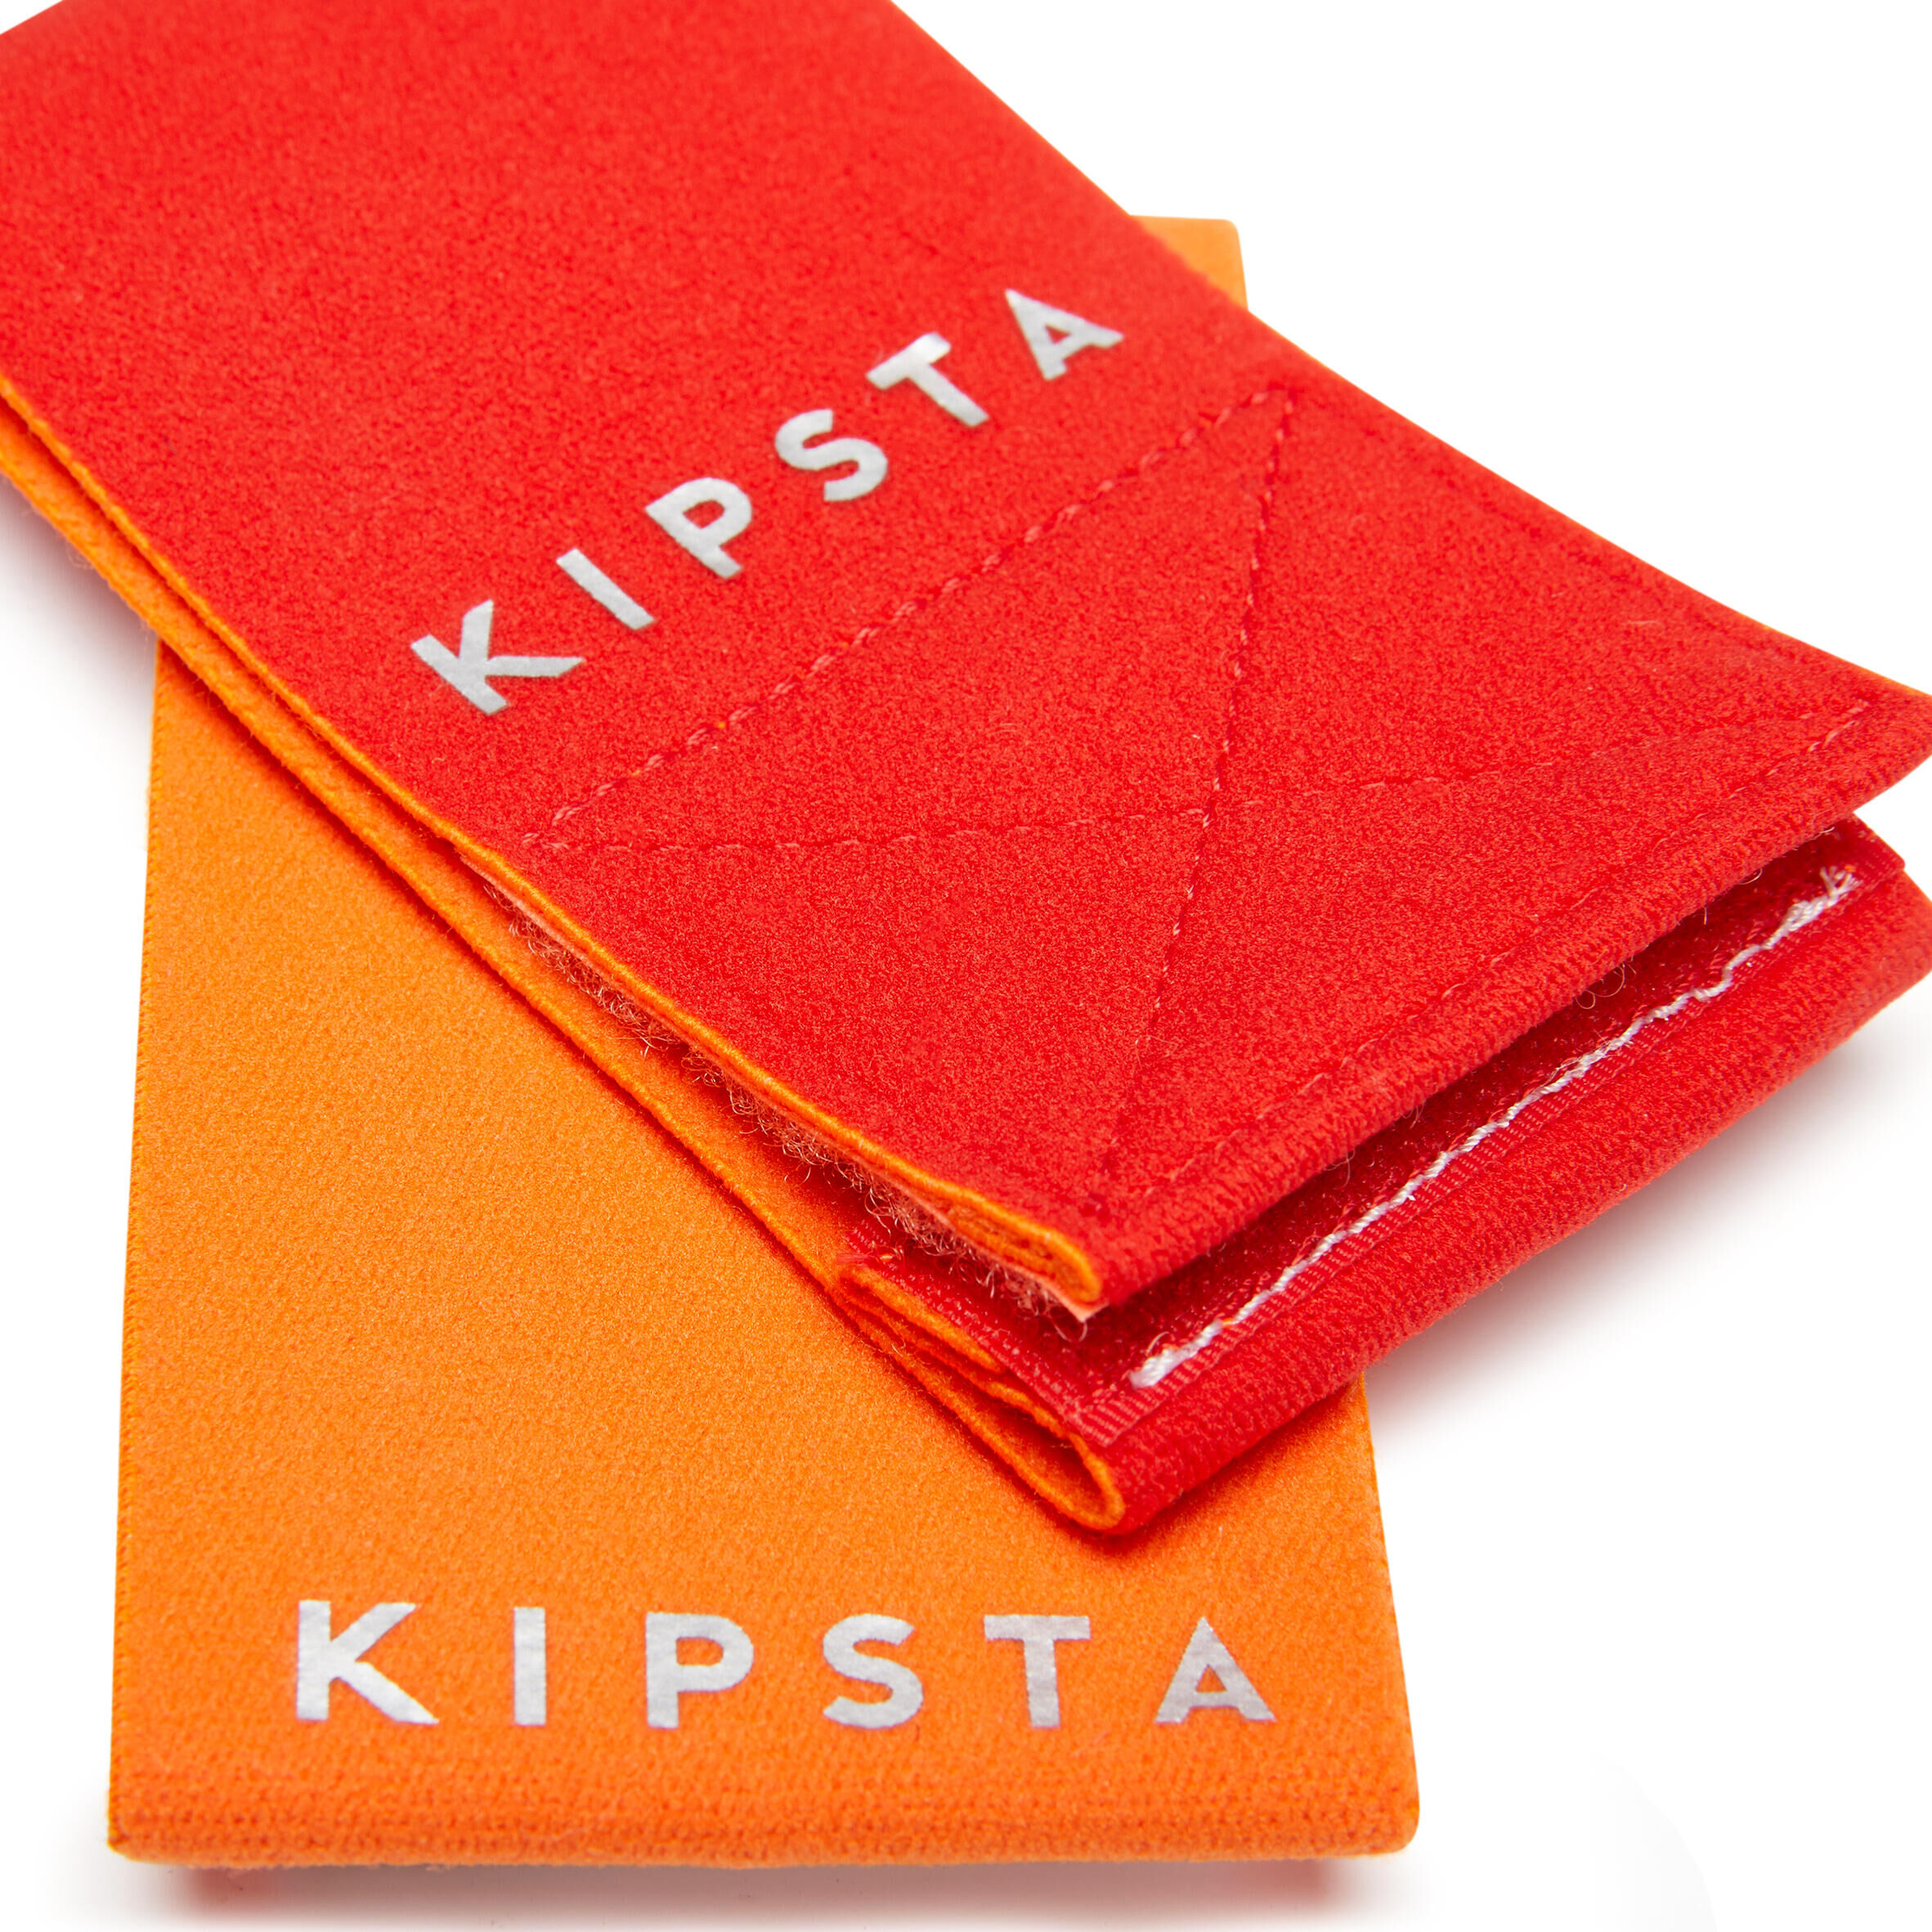 KIPSTA Reversible Support Strap - Red or Orange